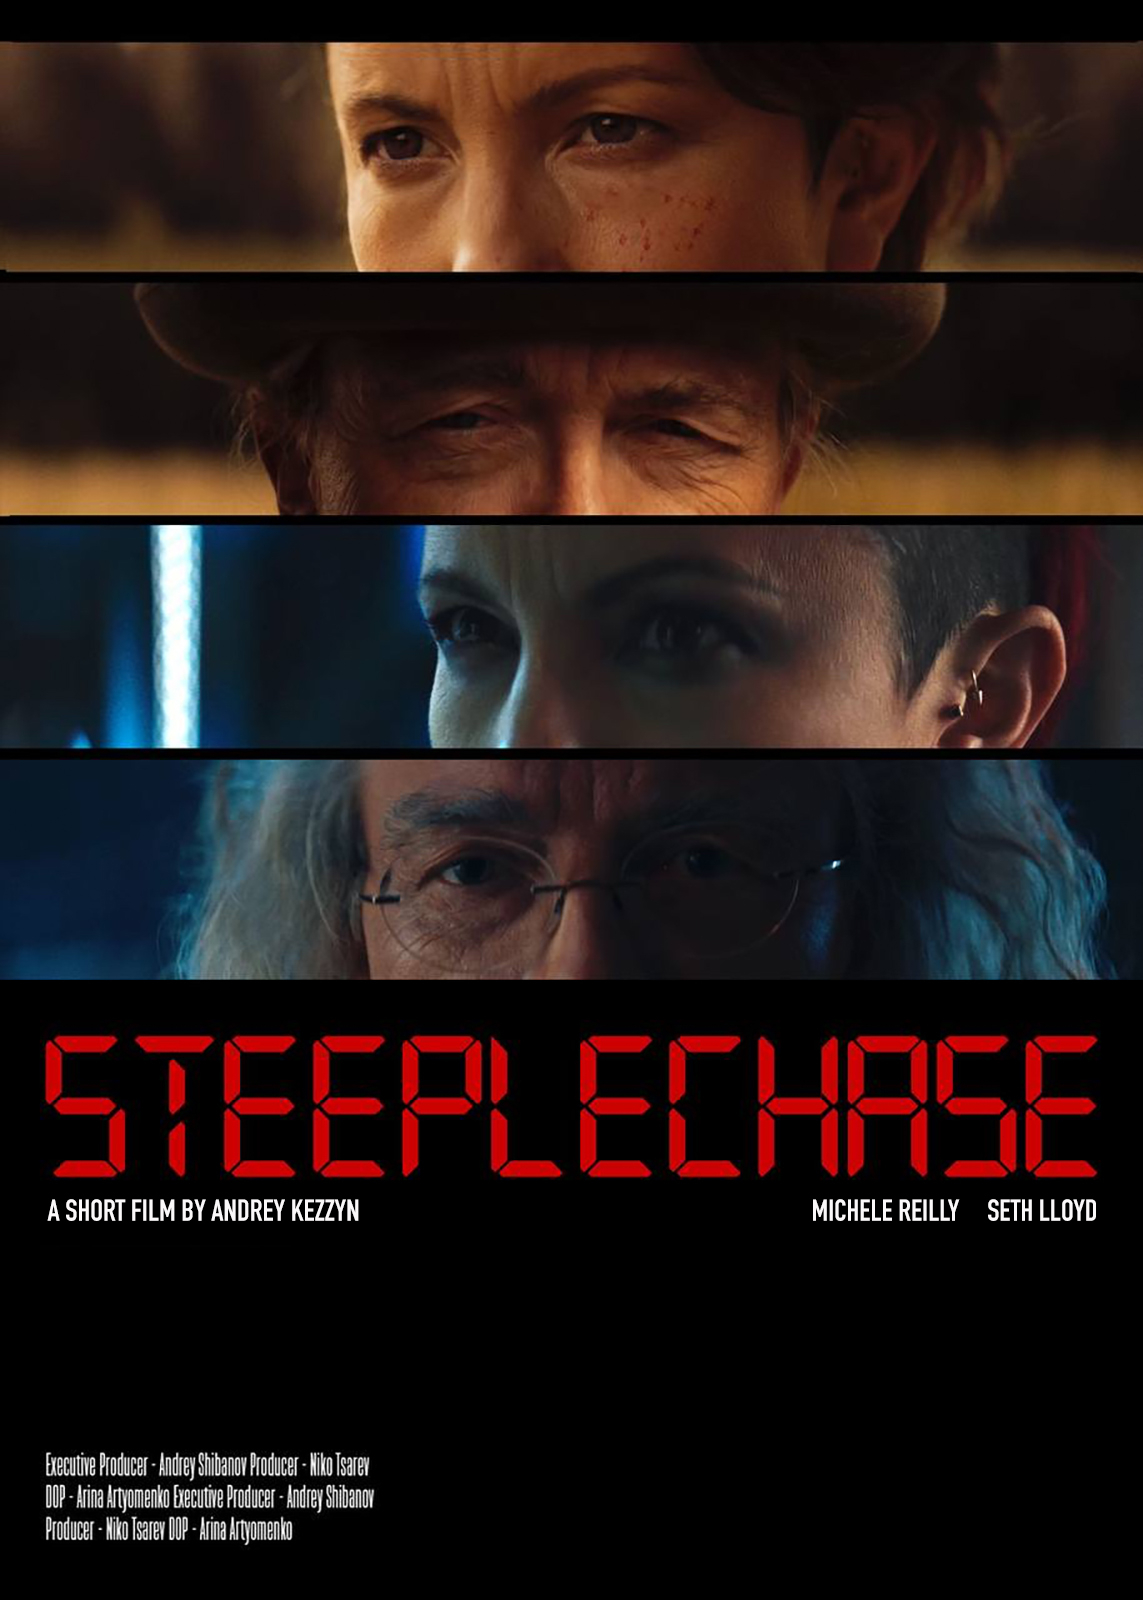 Steeplechase Film Poster